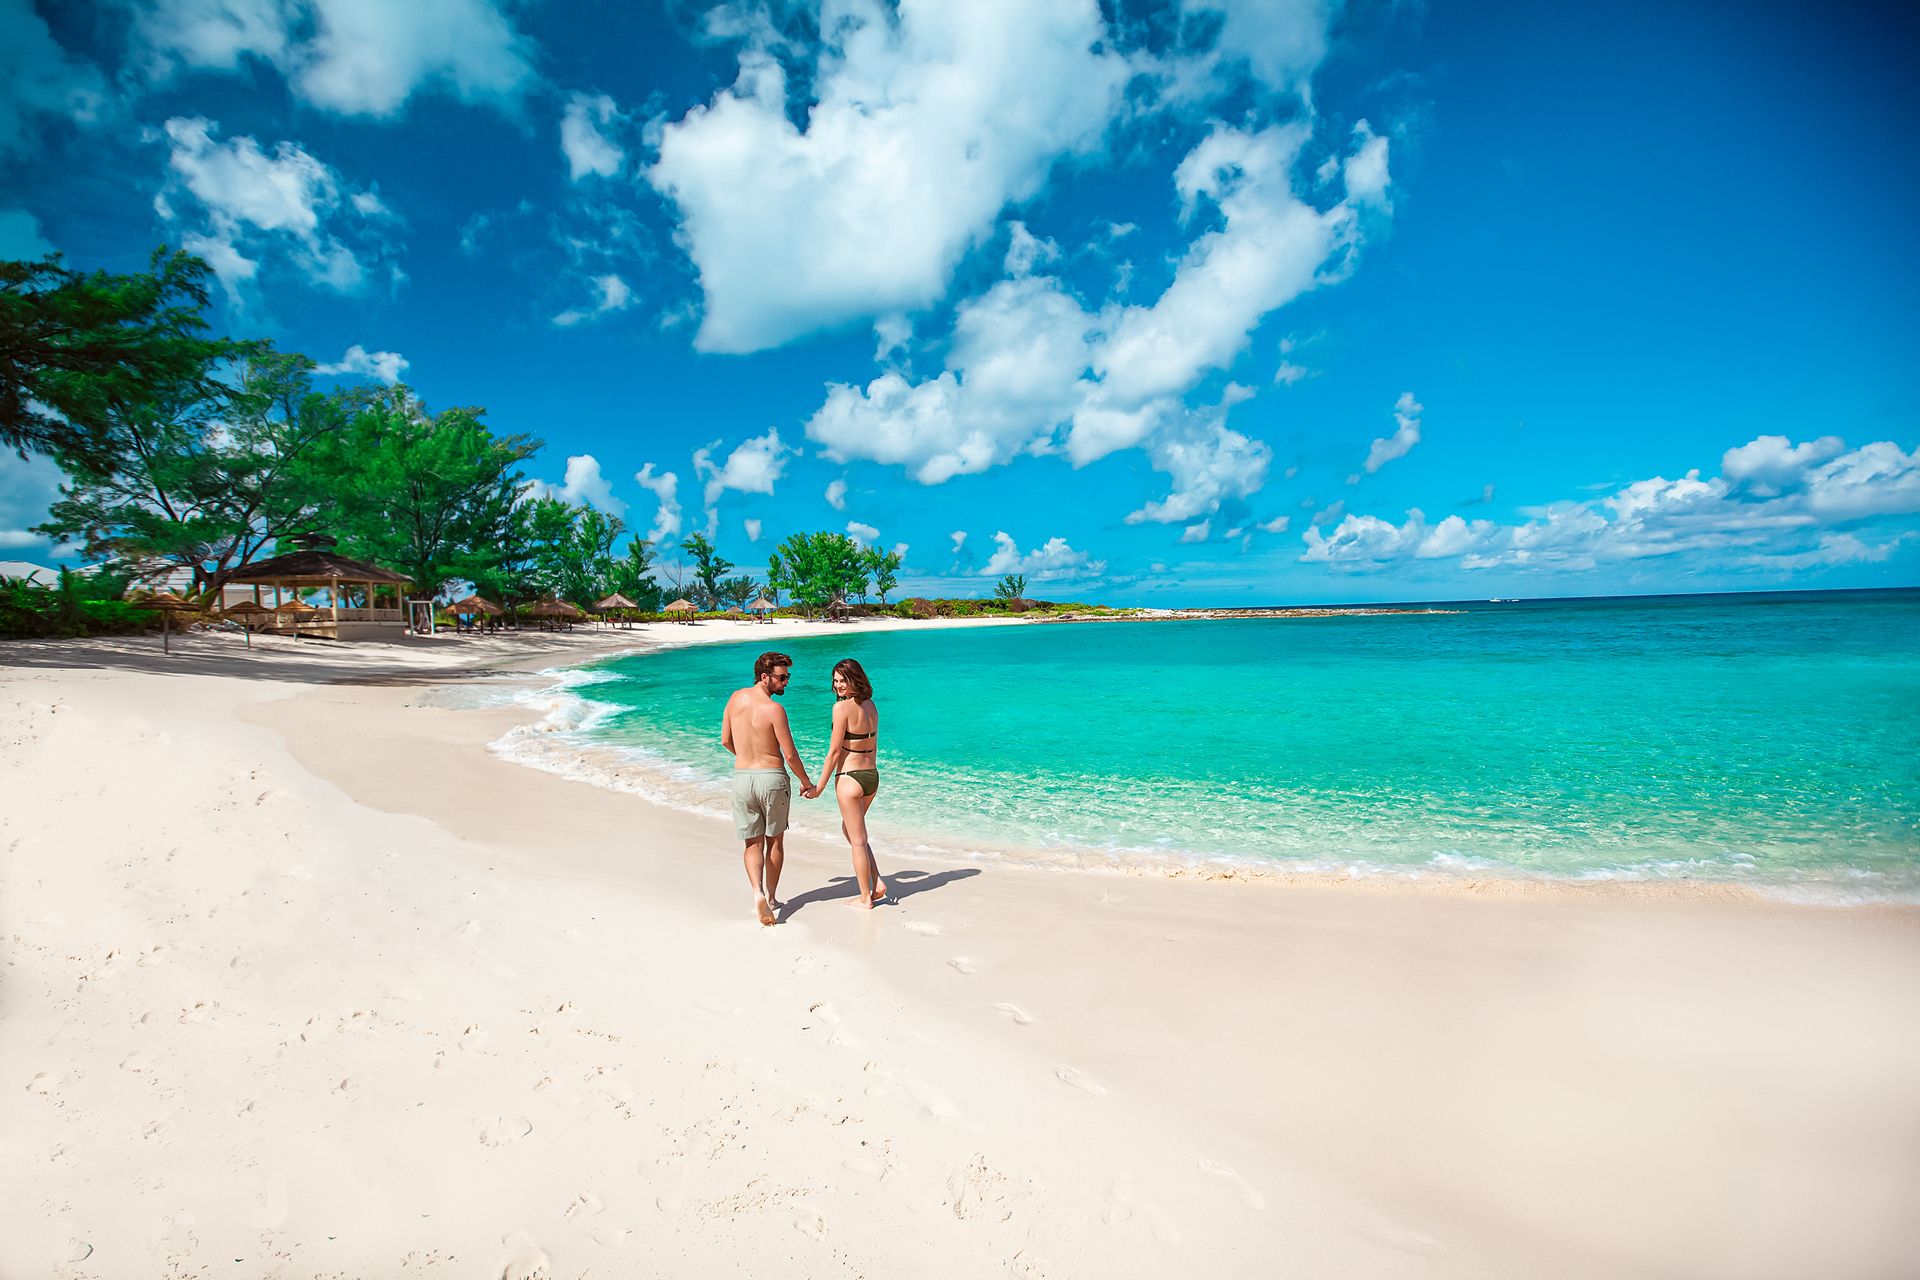 Sandals Royal Bahamian Beach Couple